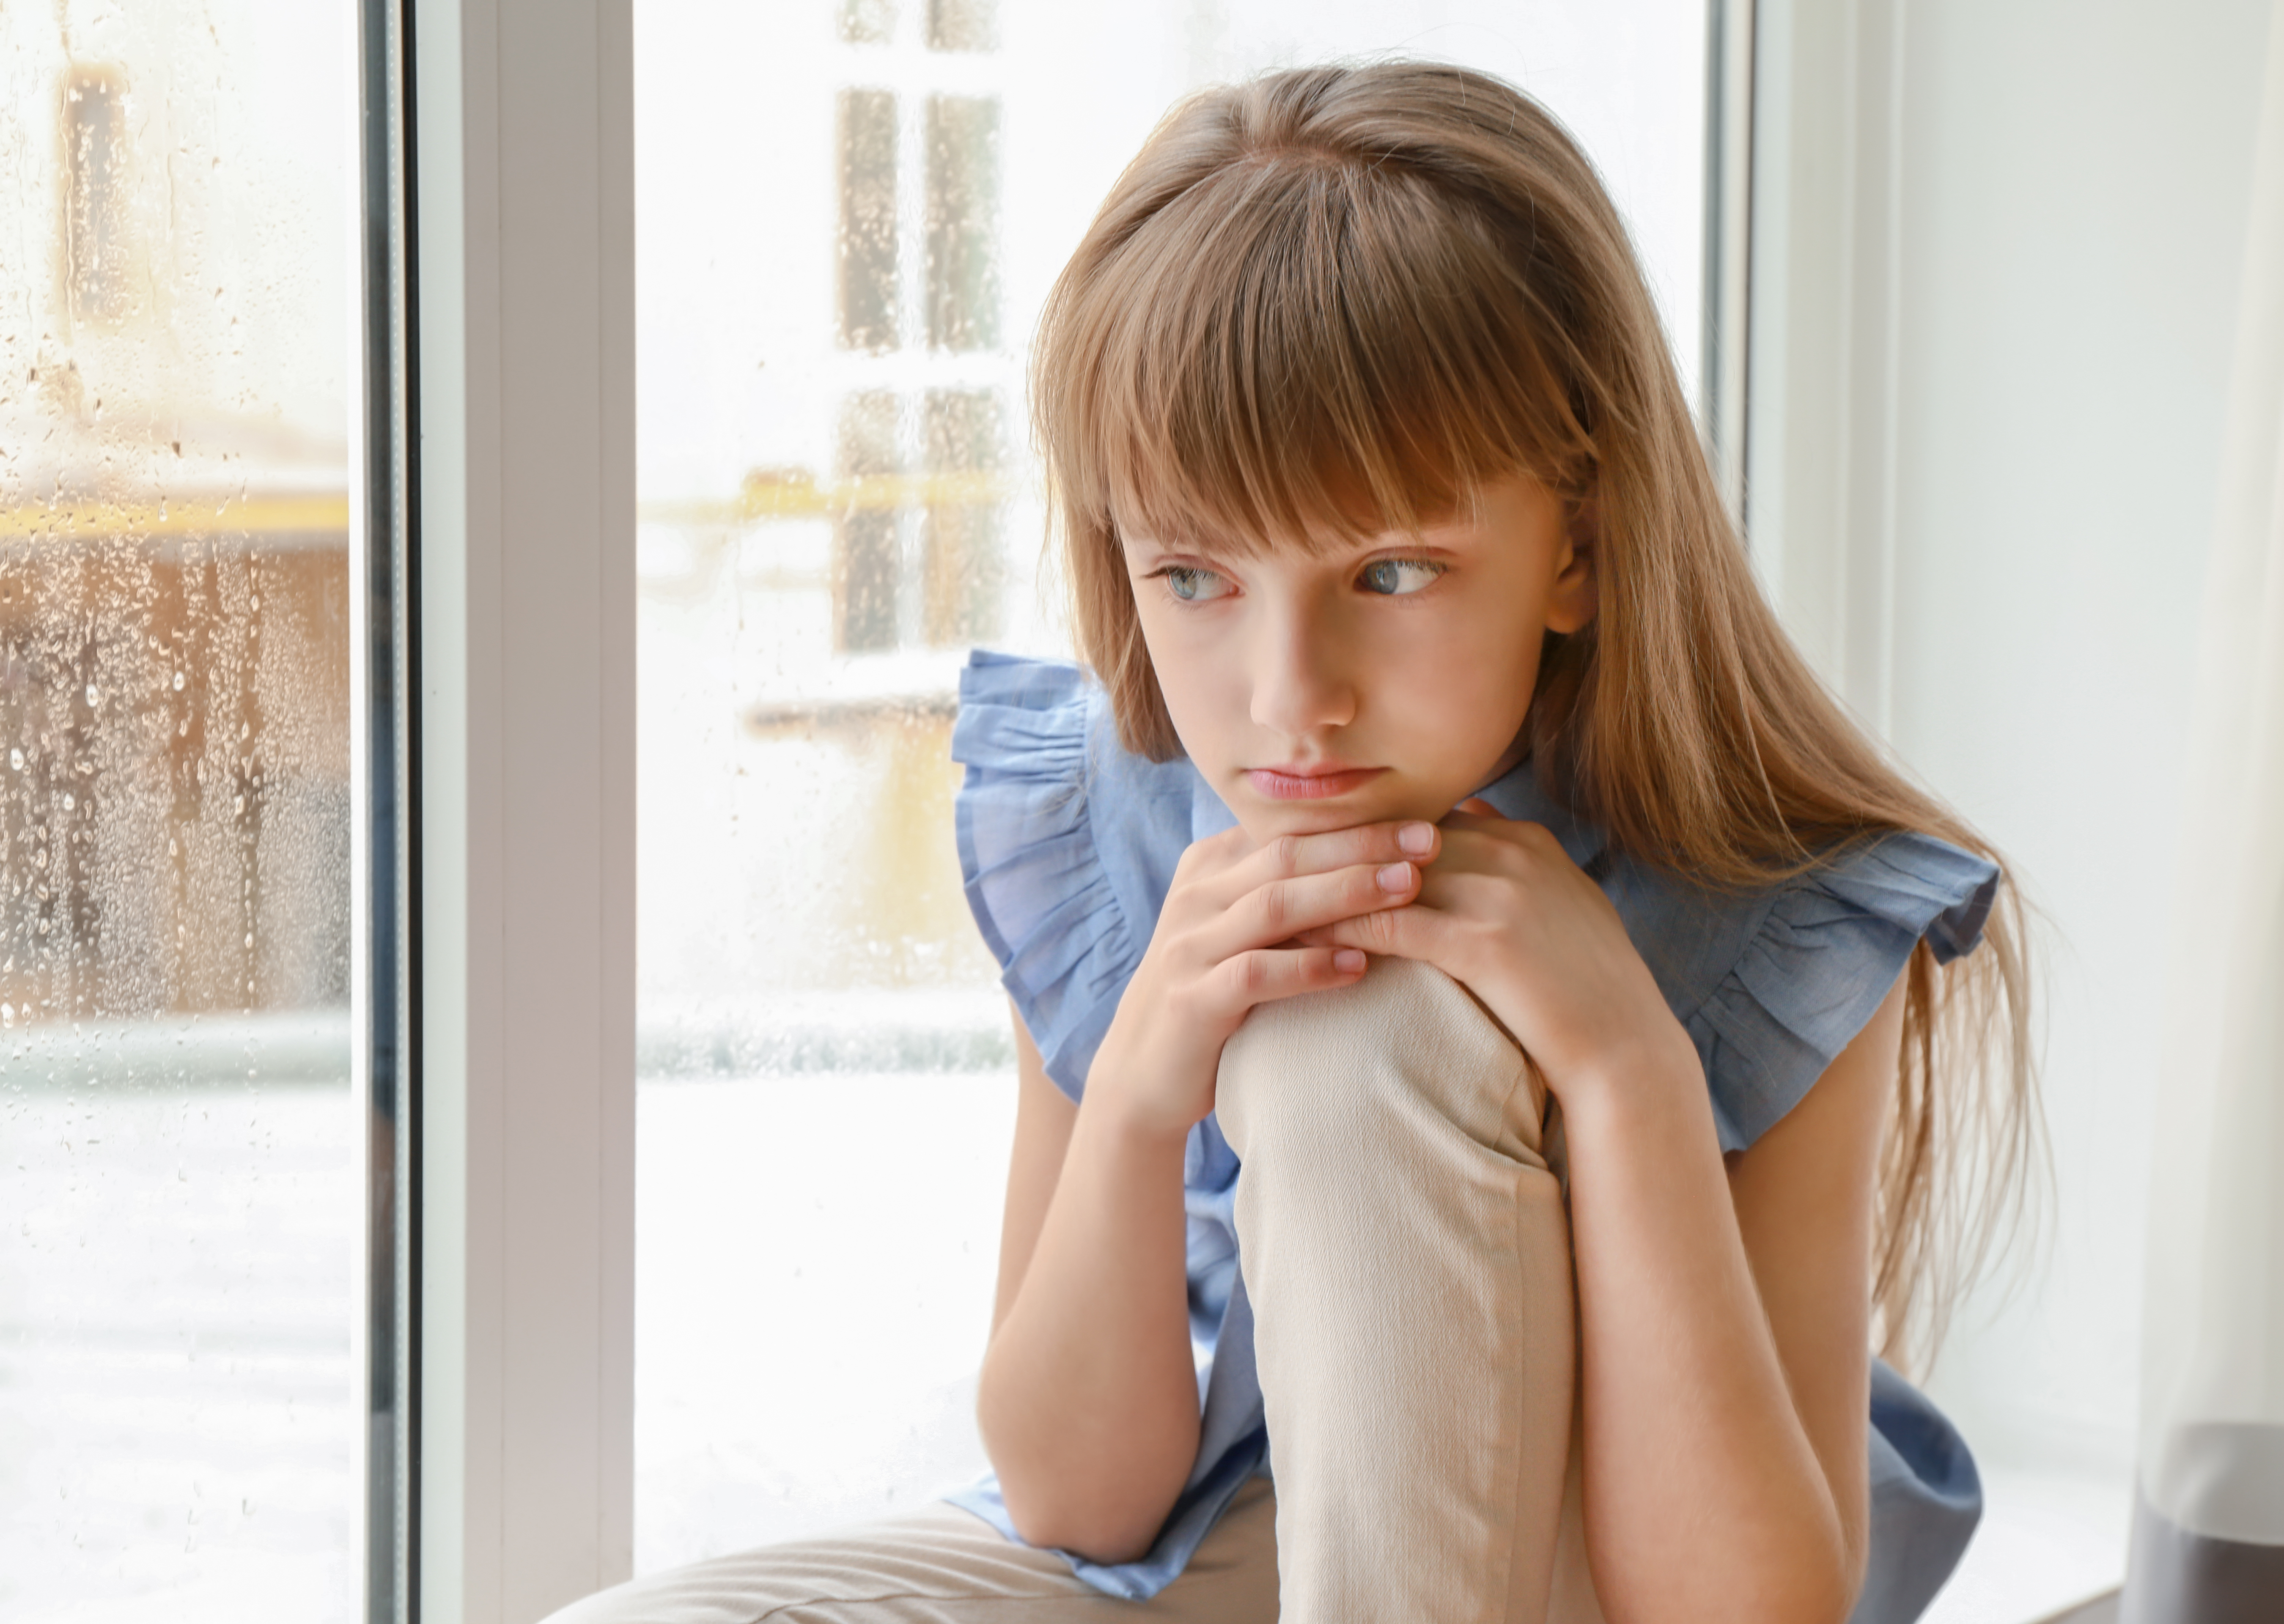 Kleines Mädchen schmollt am Fenster | Quelle: Shutterstock